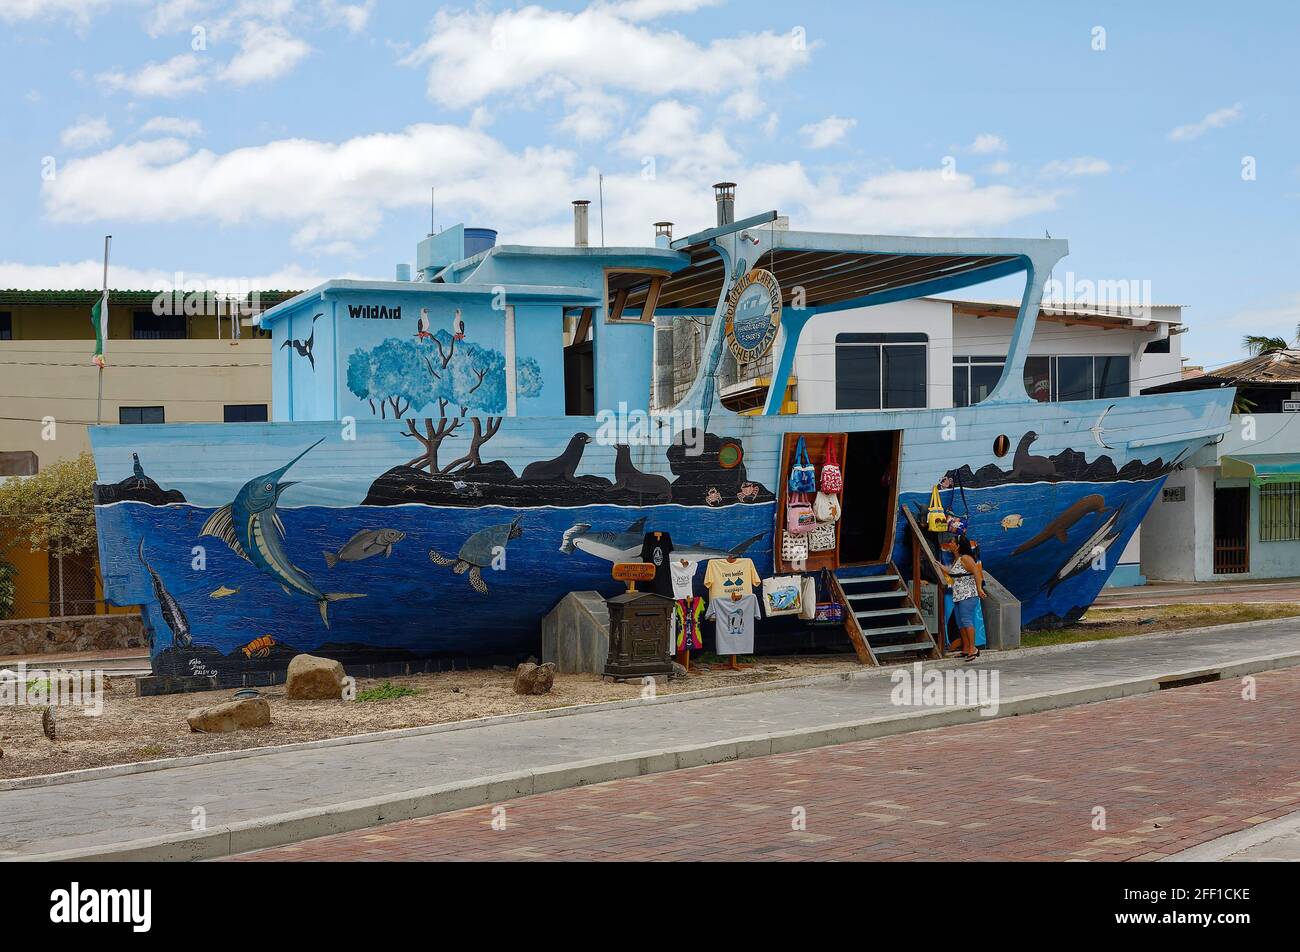 gift shop; old wood boat; decorated; marine life painting, blue, Wild Aid; brick street; Puerto Baquerizo Moreno; South America; Galapagos Islands, Sa Stock Photo